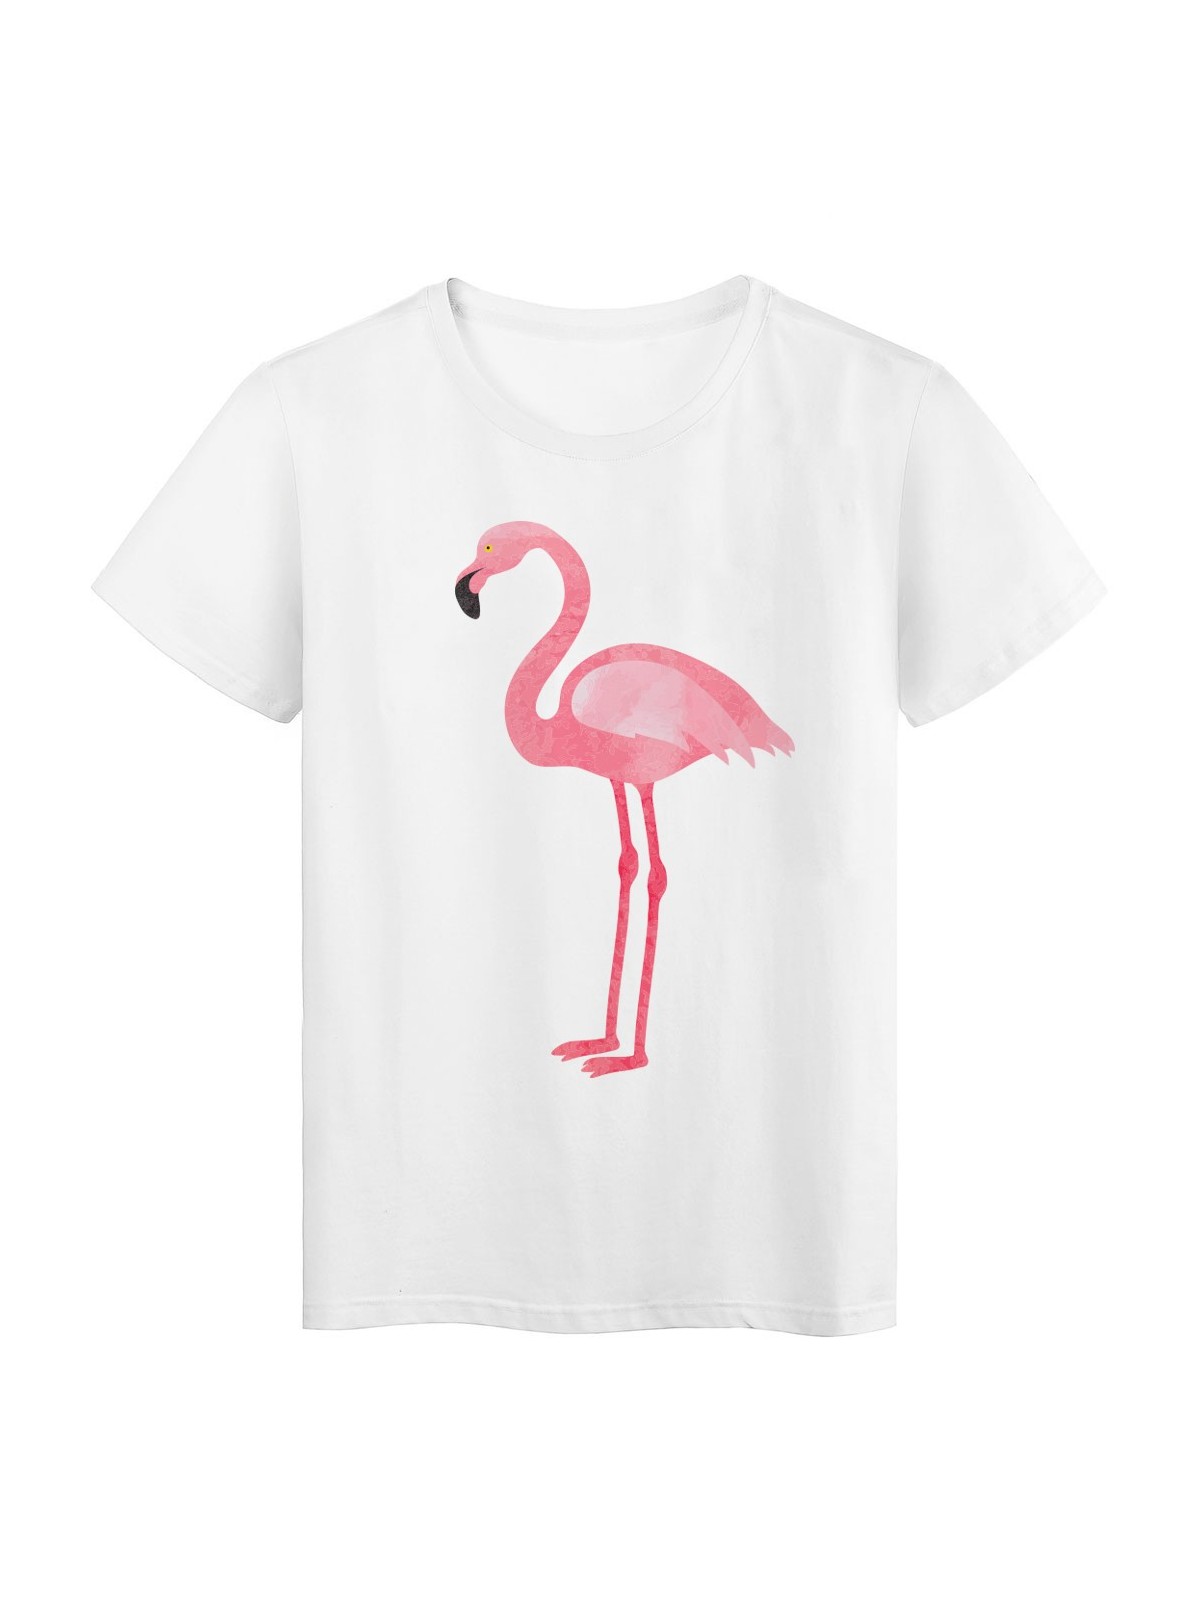 T-Shirt blanc Design oiseau flamant rose rÃ©f Tee shirt 2170